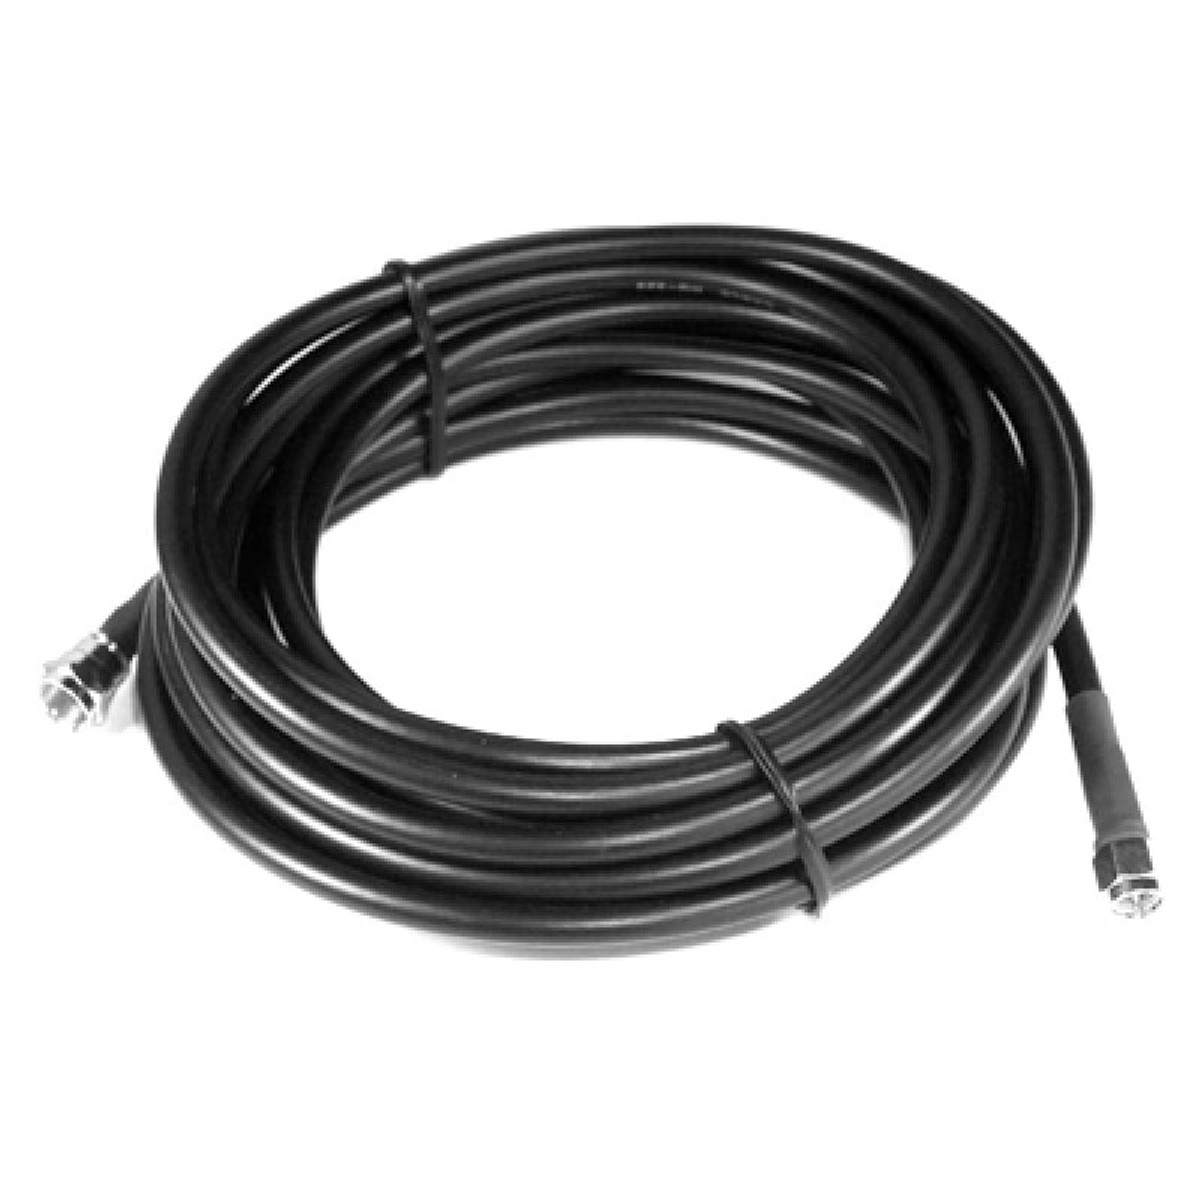 Wilson 30 ft CBL RG6 Cable F-Male / SMA-Male Connectors - 950631